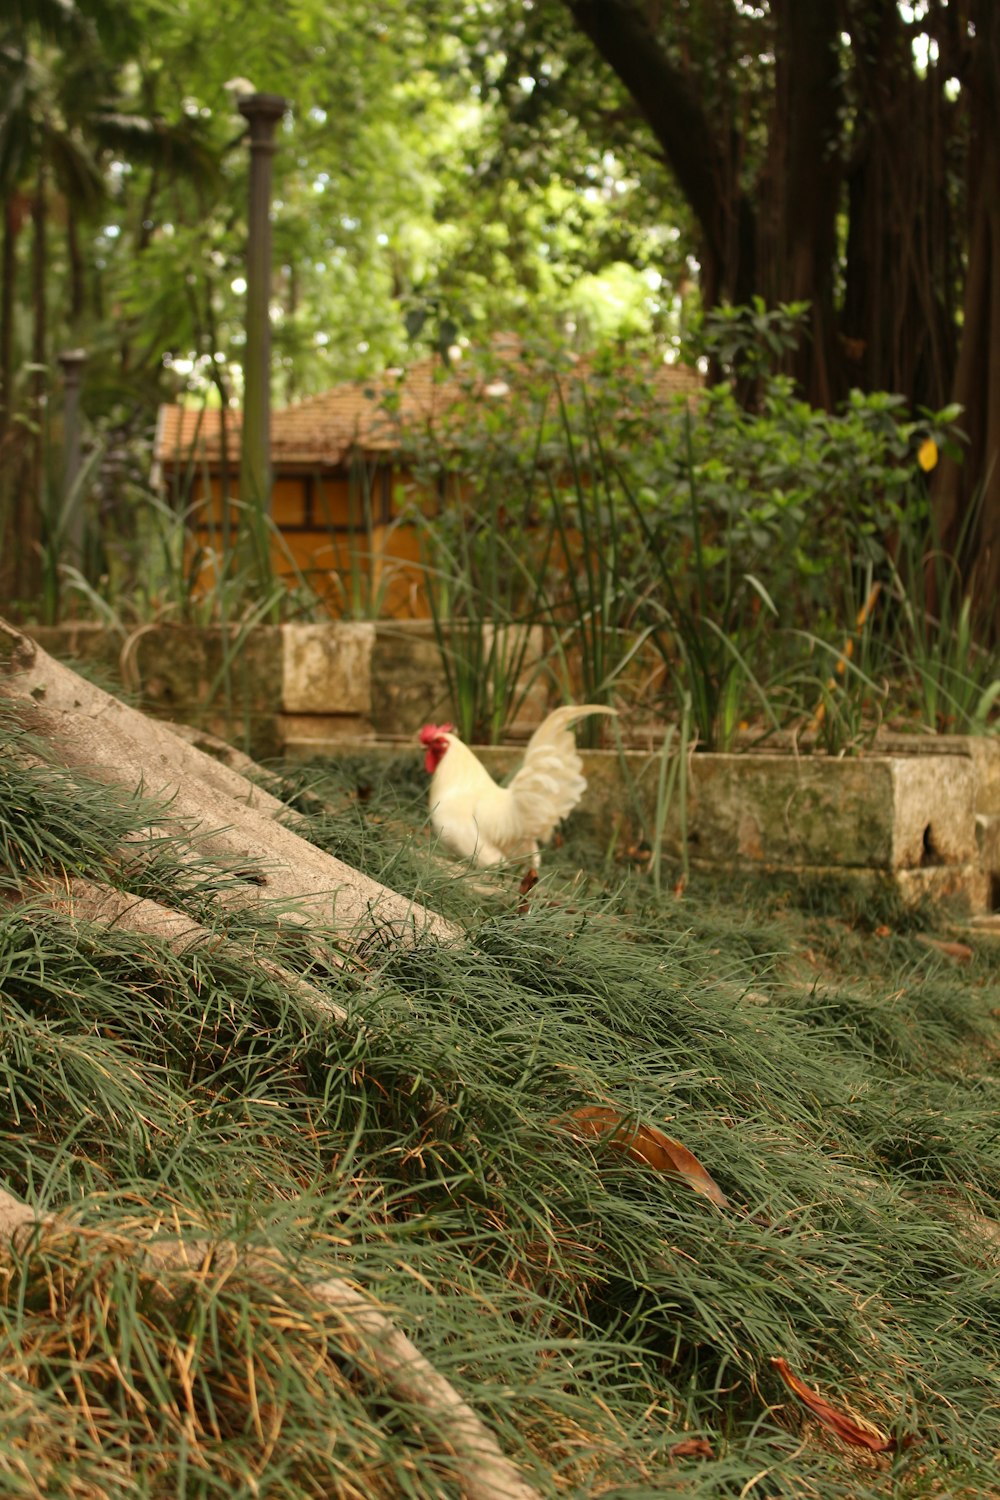 a chicken standing on grass